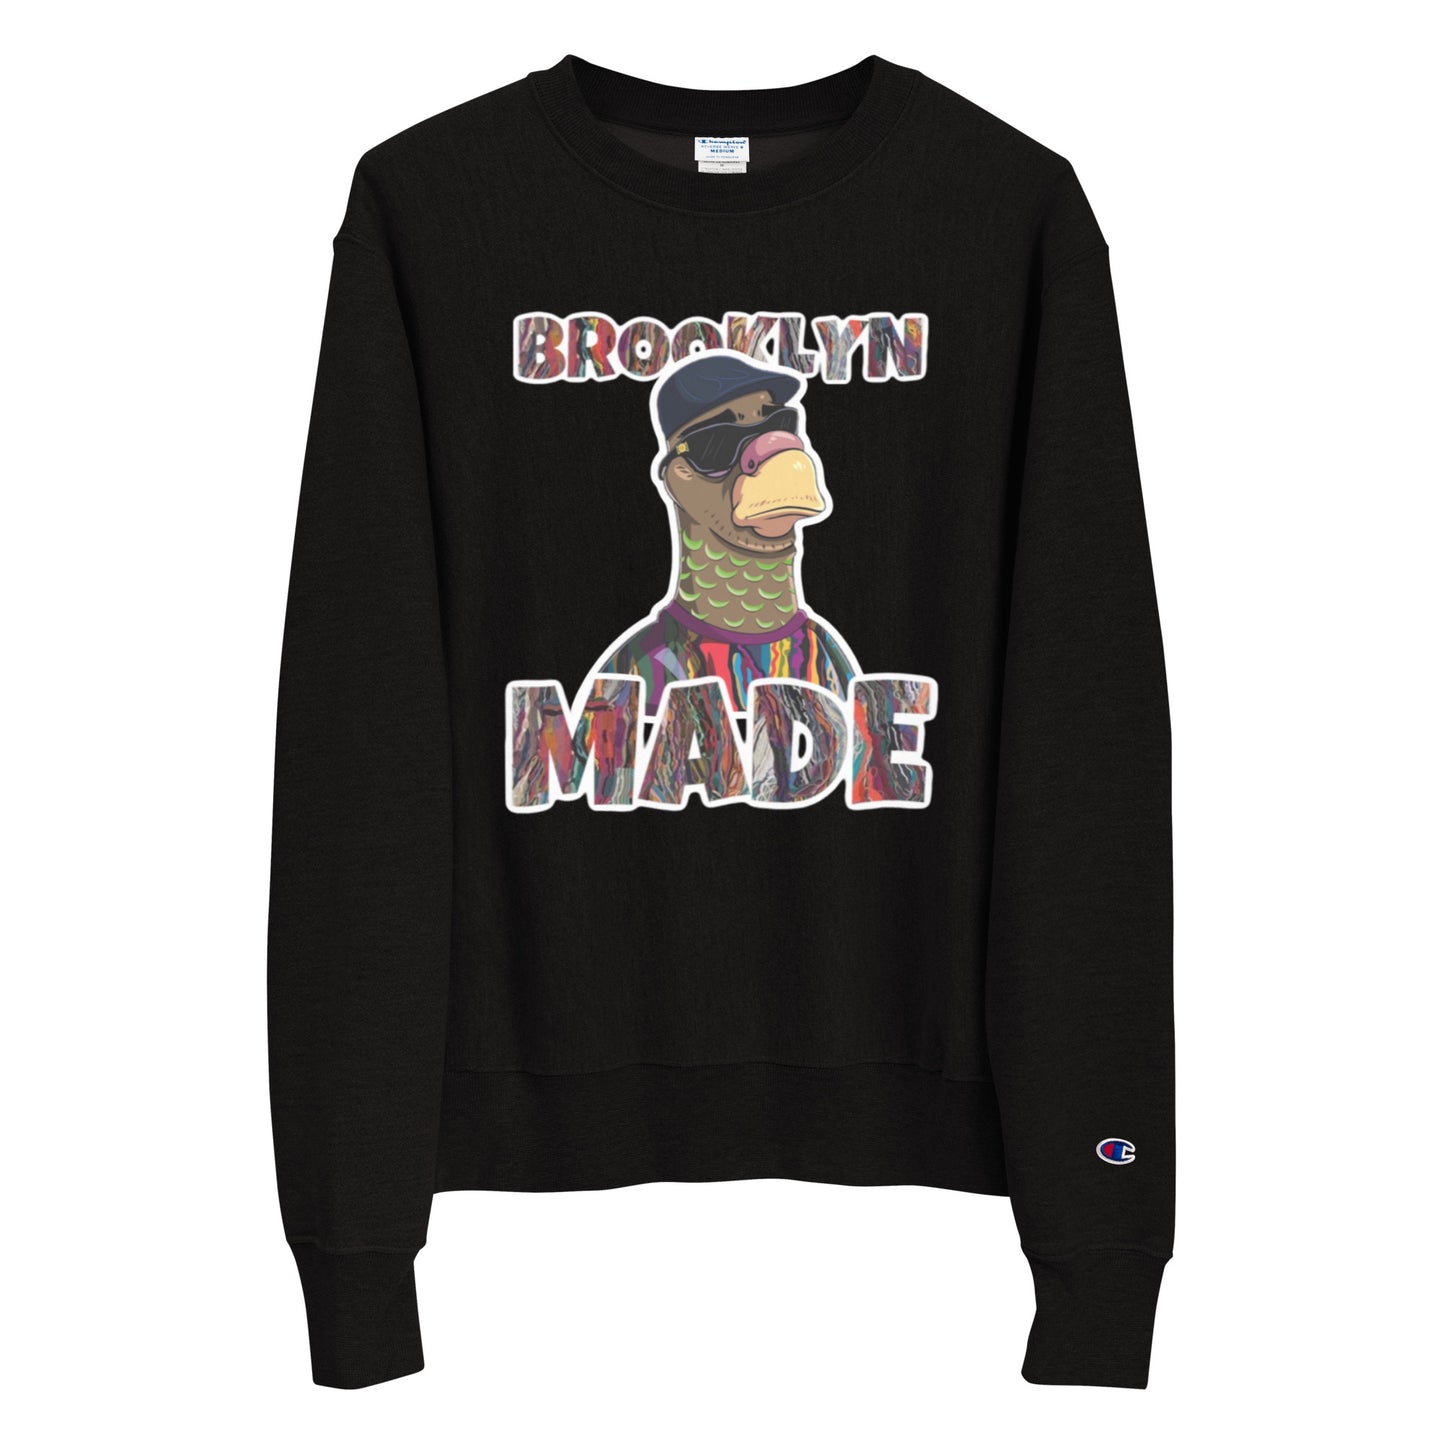 BROOKLYN MADE b.i.g. sweater